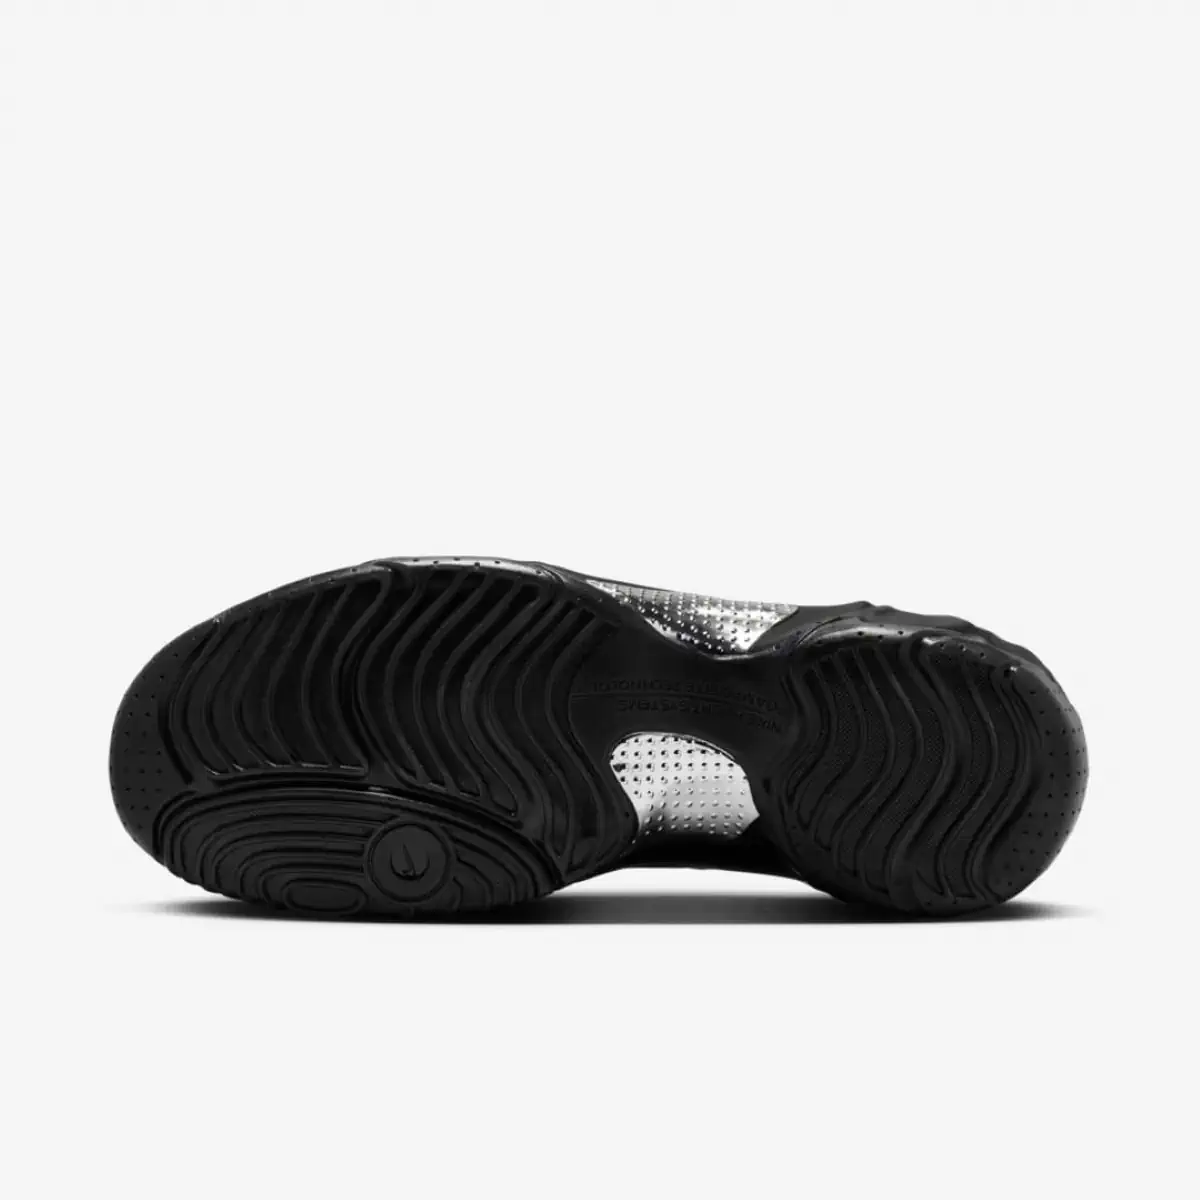 Nike Clogposite "Triple Black" sets new standard in slip-on sneakers